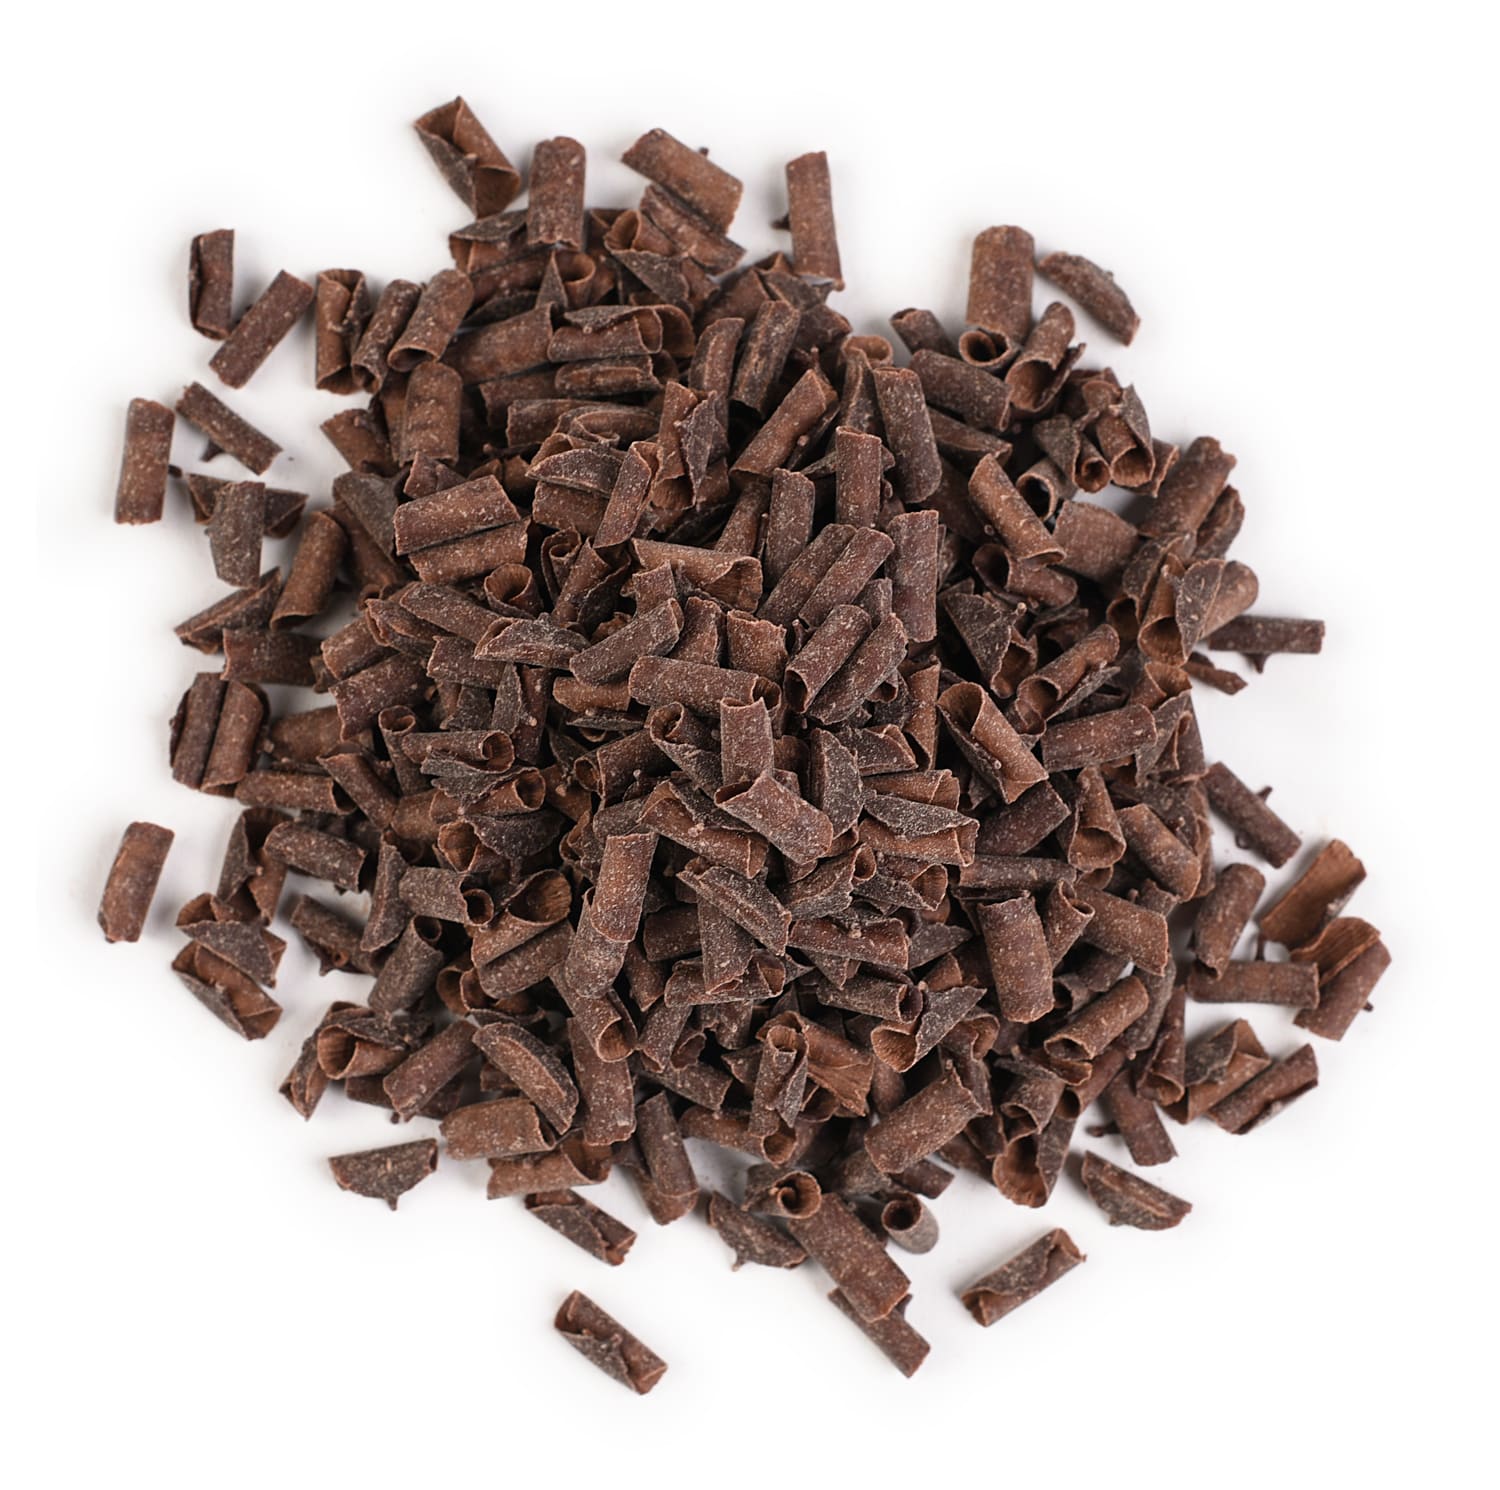 Boîte de chocolat Hot Callebaut - 1,4 kg